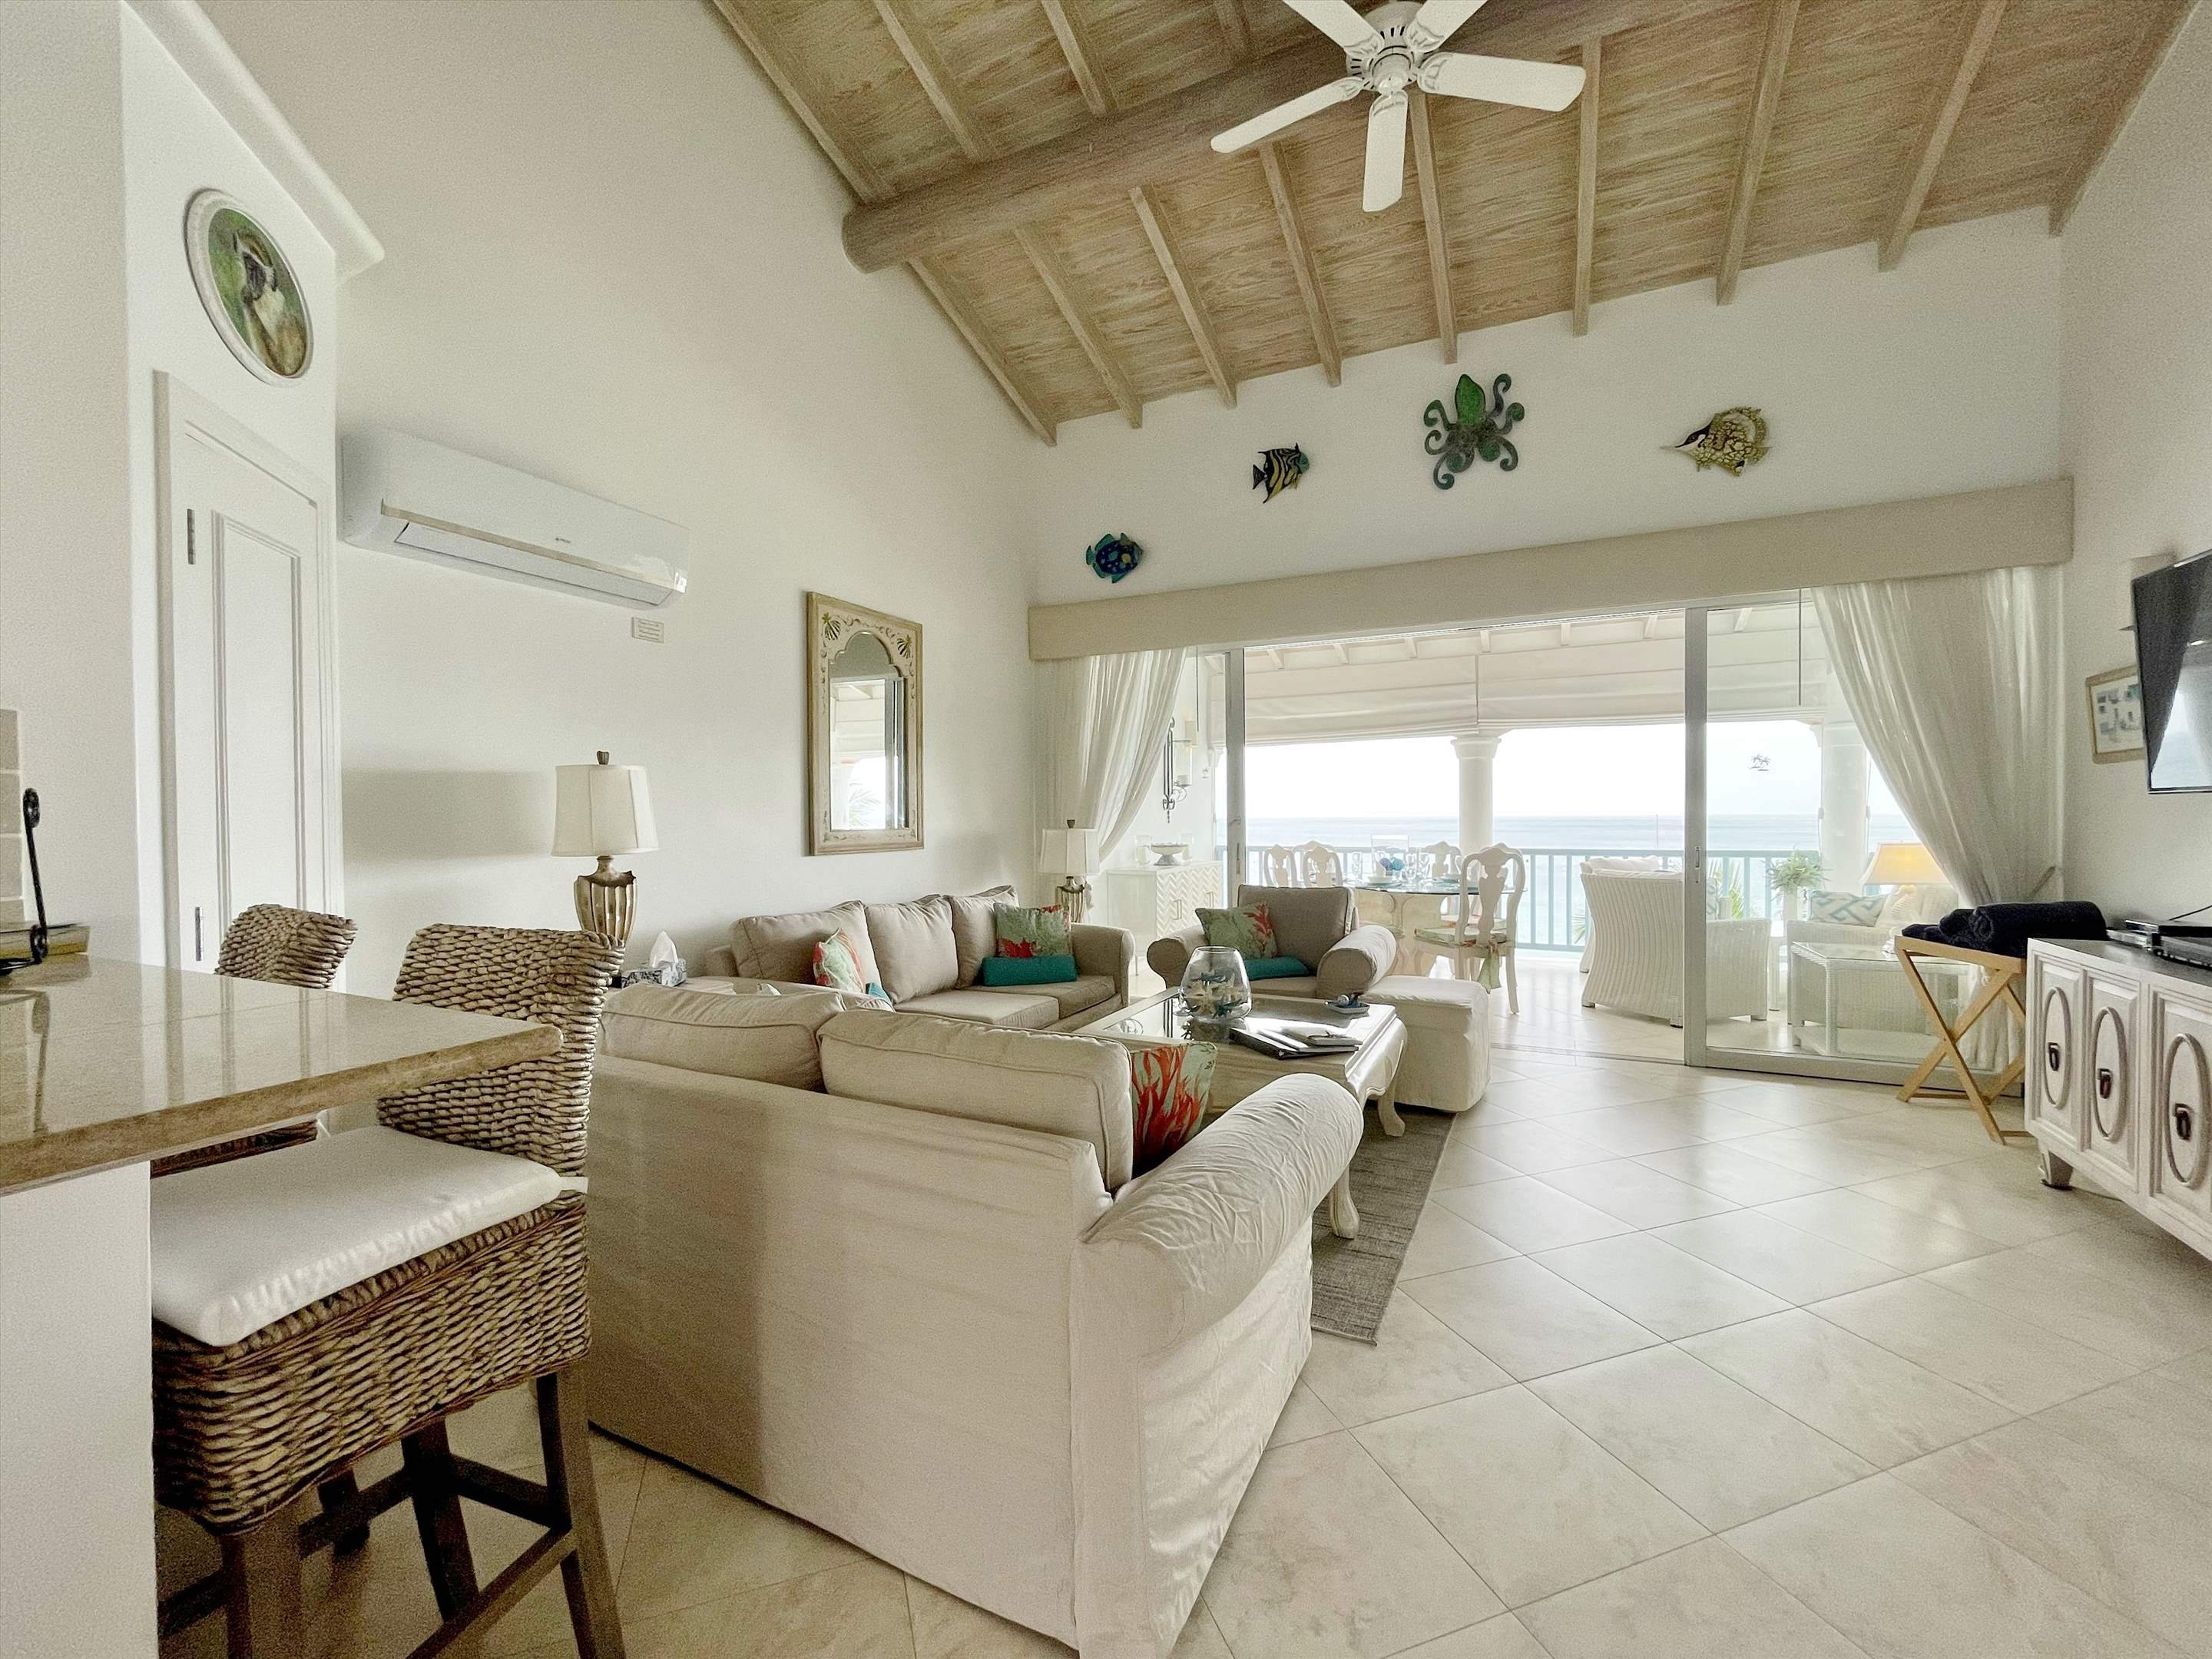 Villas on the Beach 403, 2 bedroom, 2 bedroom apartment in St. James & West Coast, Barbados Photo #7